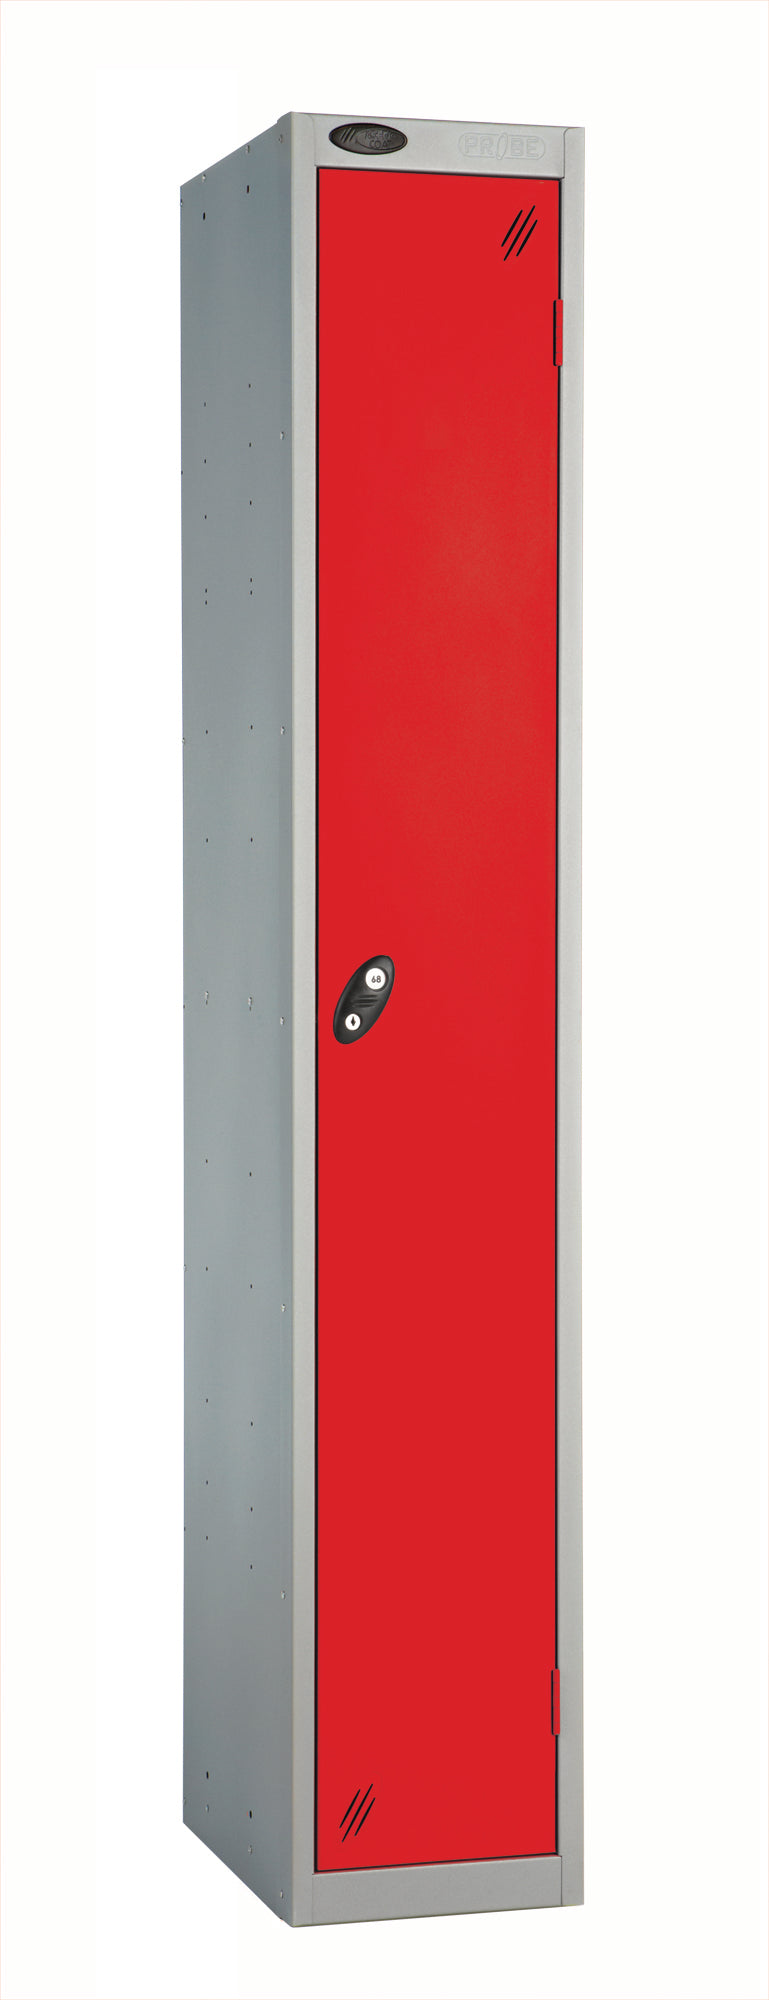 PROBEBOX STANDARD 1 NEST STEEL LOCKERS - FLAME RED 1 DOOR Storage Lockers > Lockers > Cabinets > Storage > Probe > One Stop For Safety   